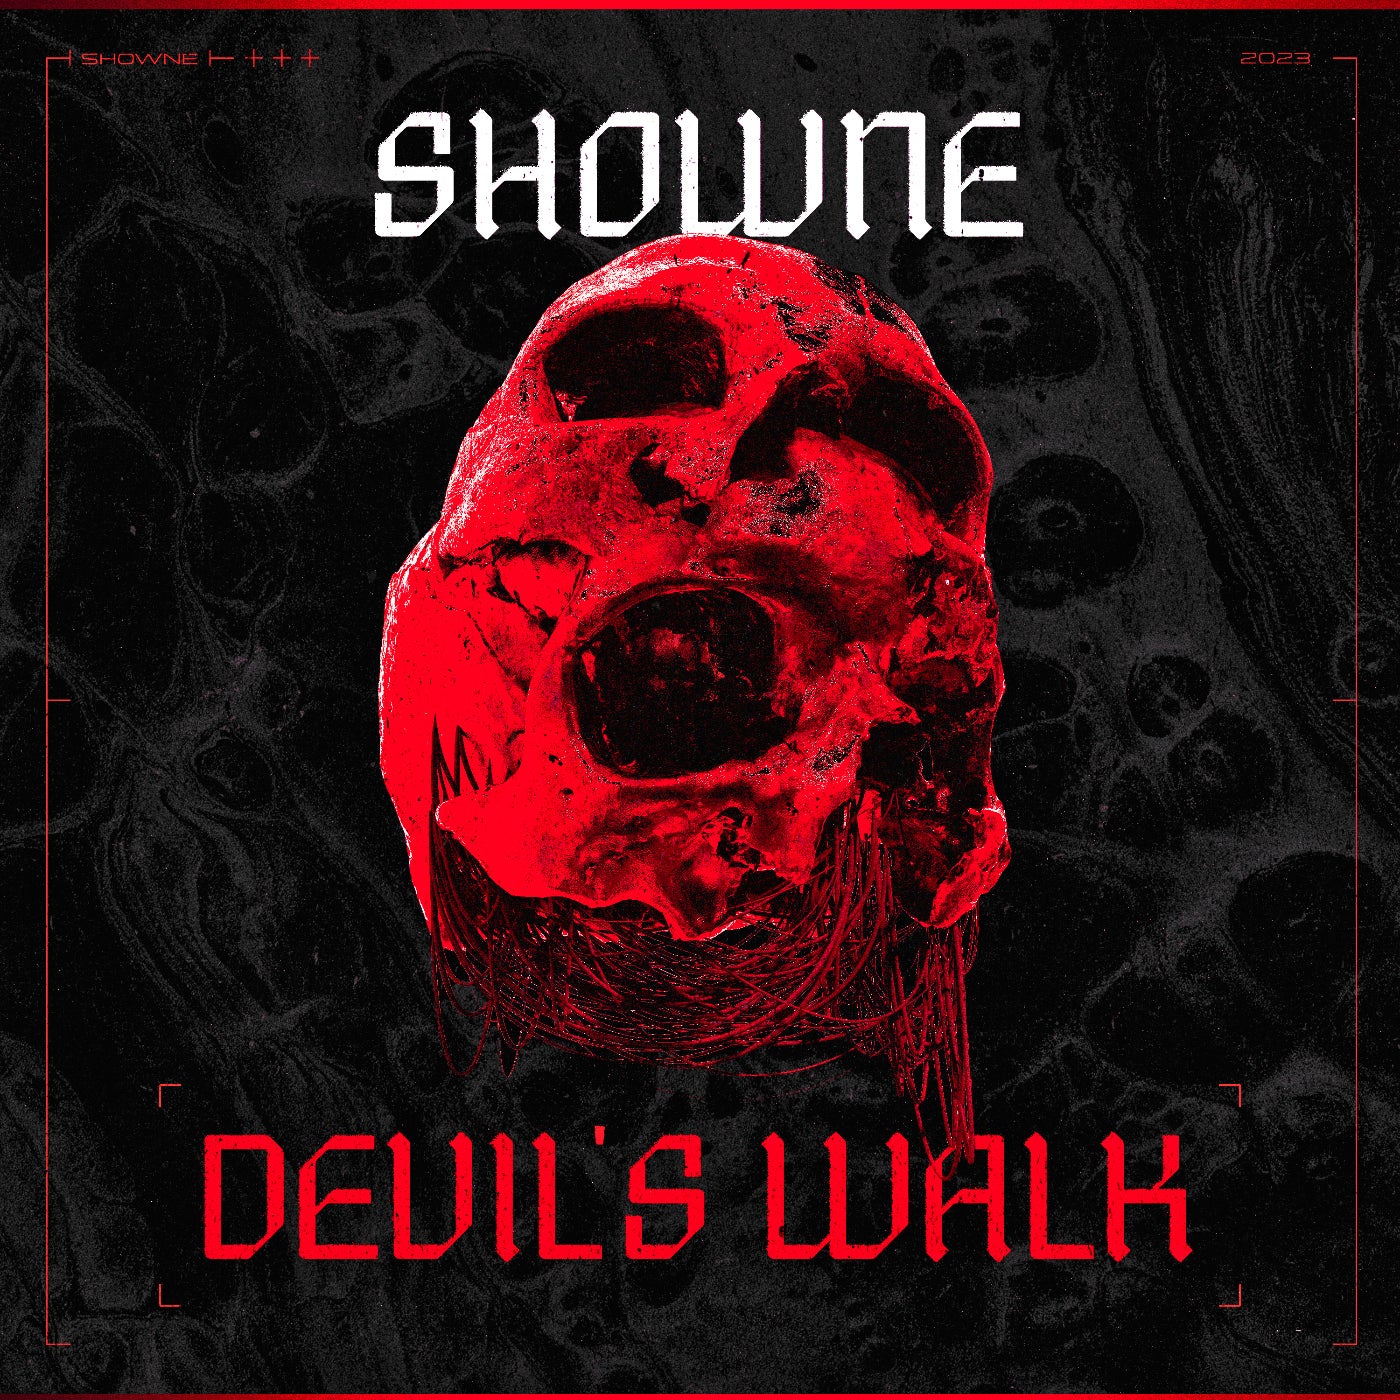 Devil's Walk